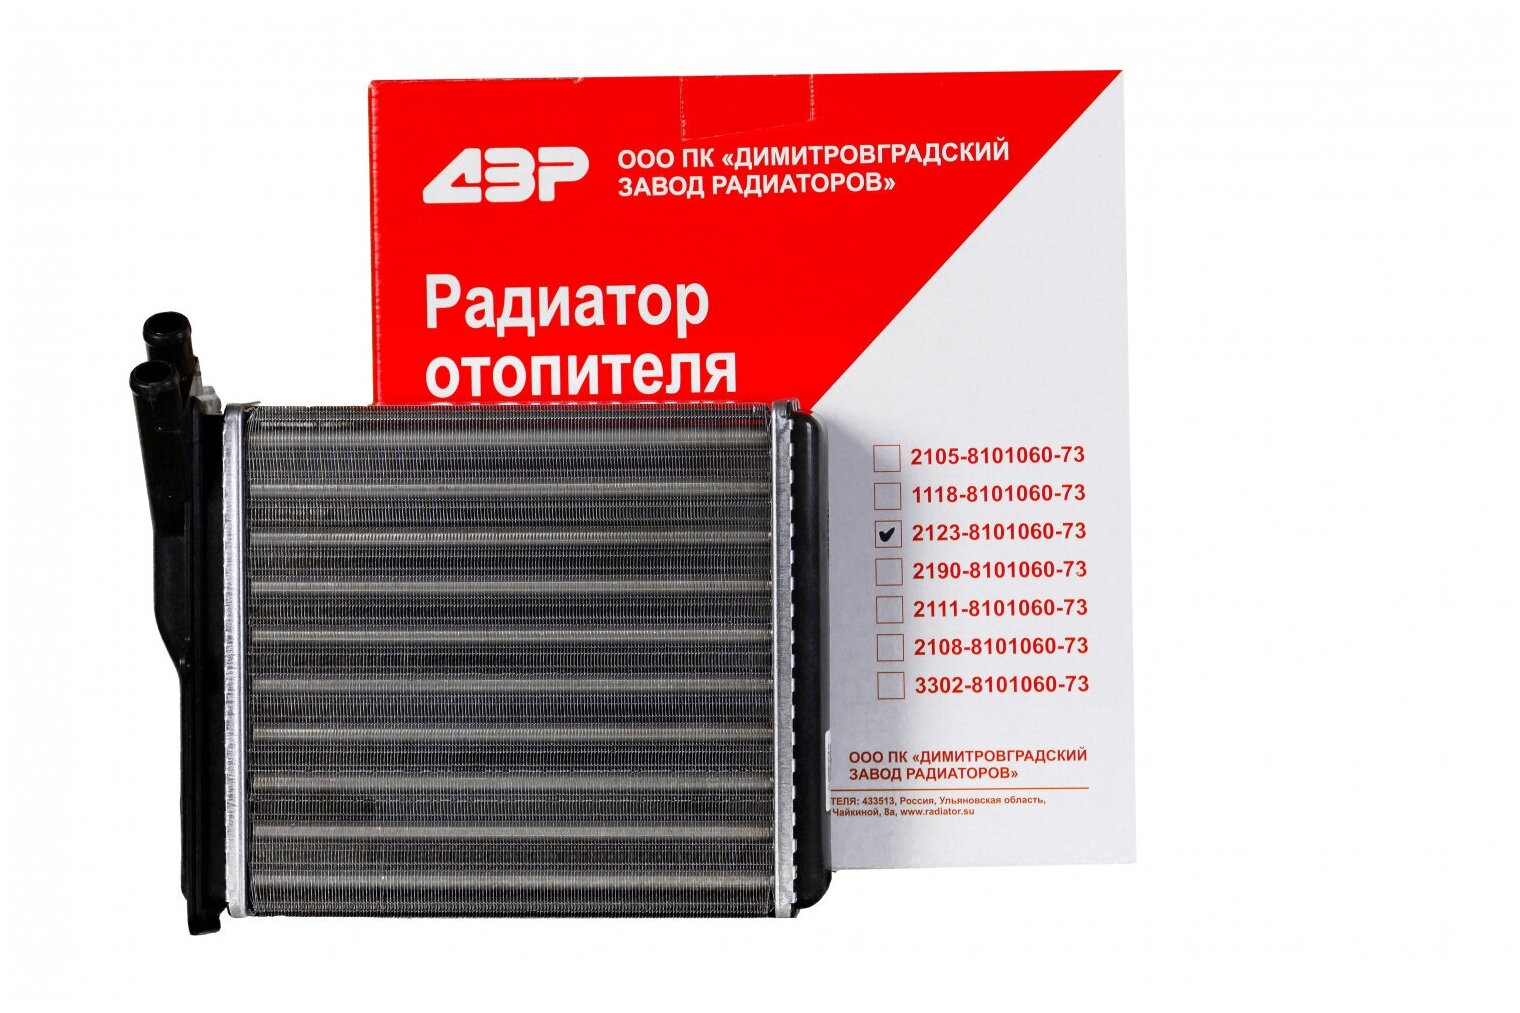 Радиатор отопителя салона 2123-8101060-73 для а/м ВАЗ-2123 Шевроле "Нива" (Chevrolet Niva)